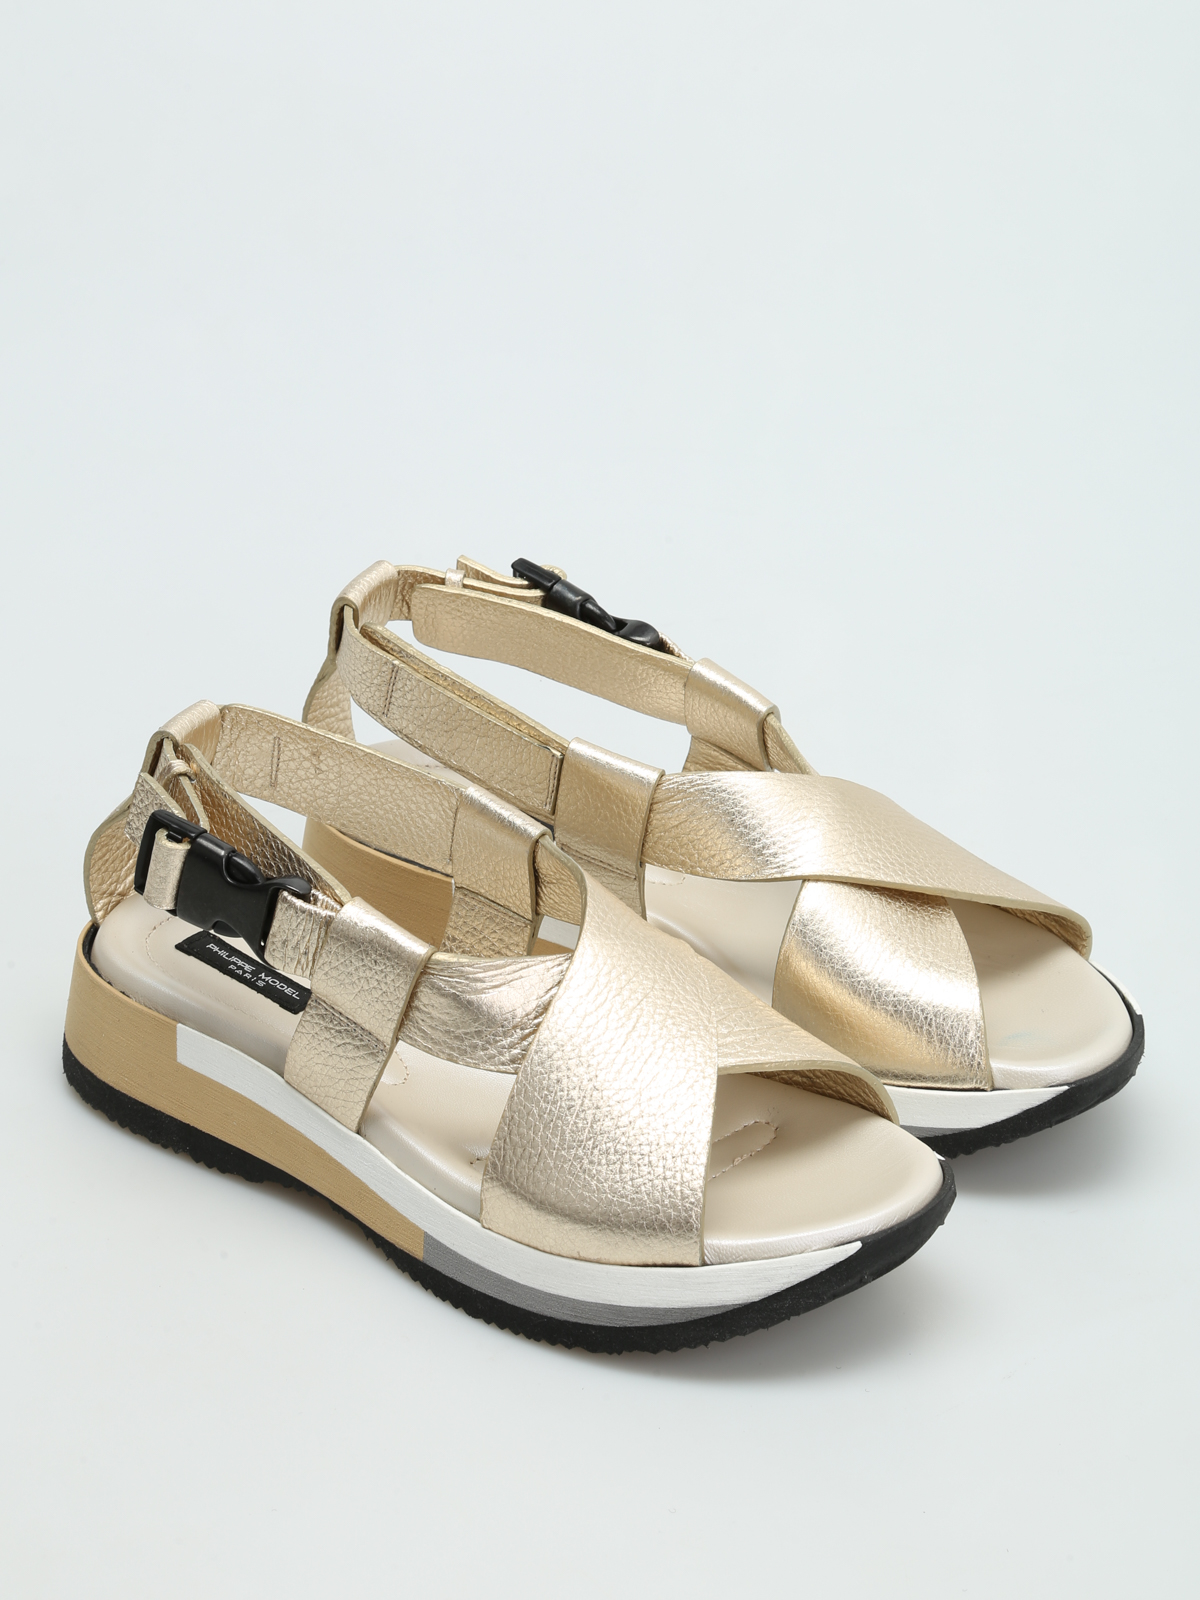 Sandals Philippe Model - Peonia sandals - GPLDDM01 | Shop online at iKRIX